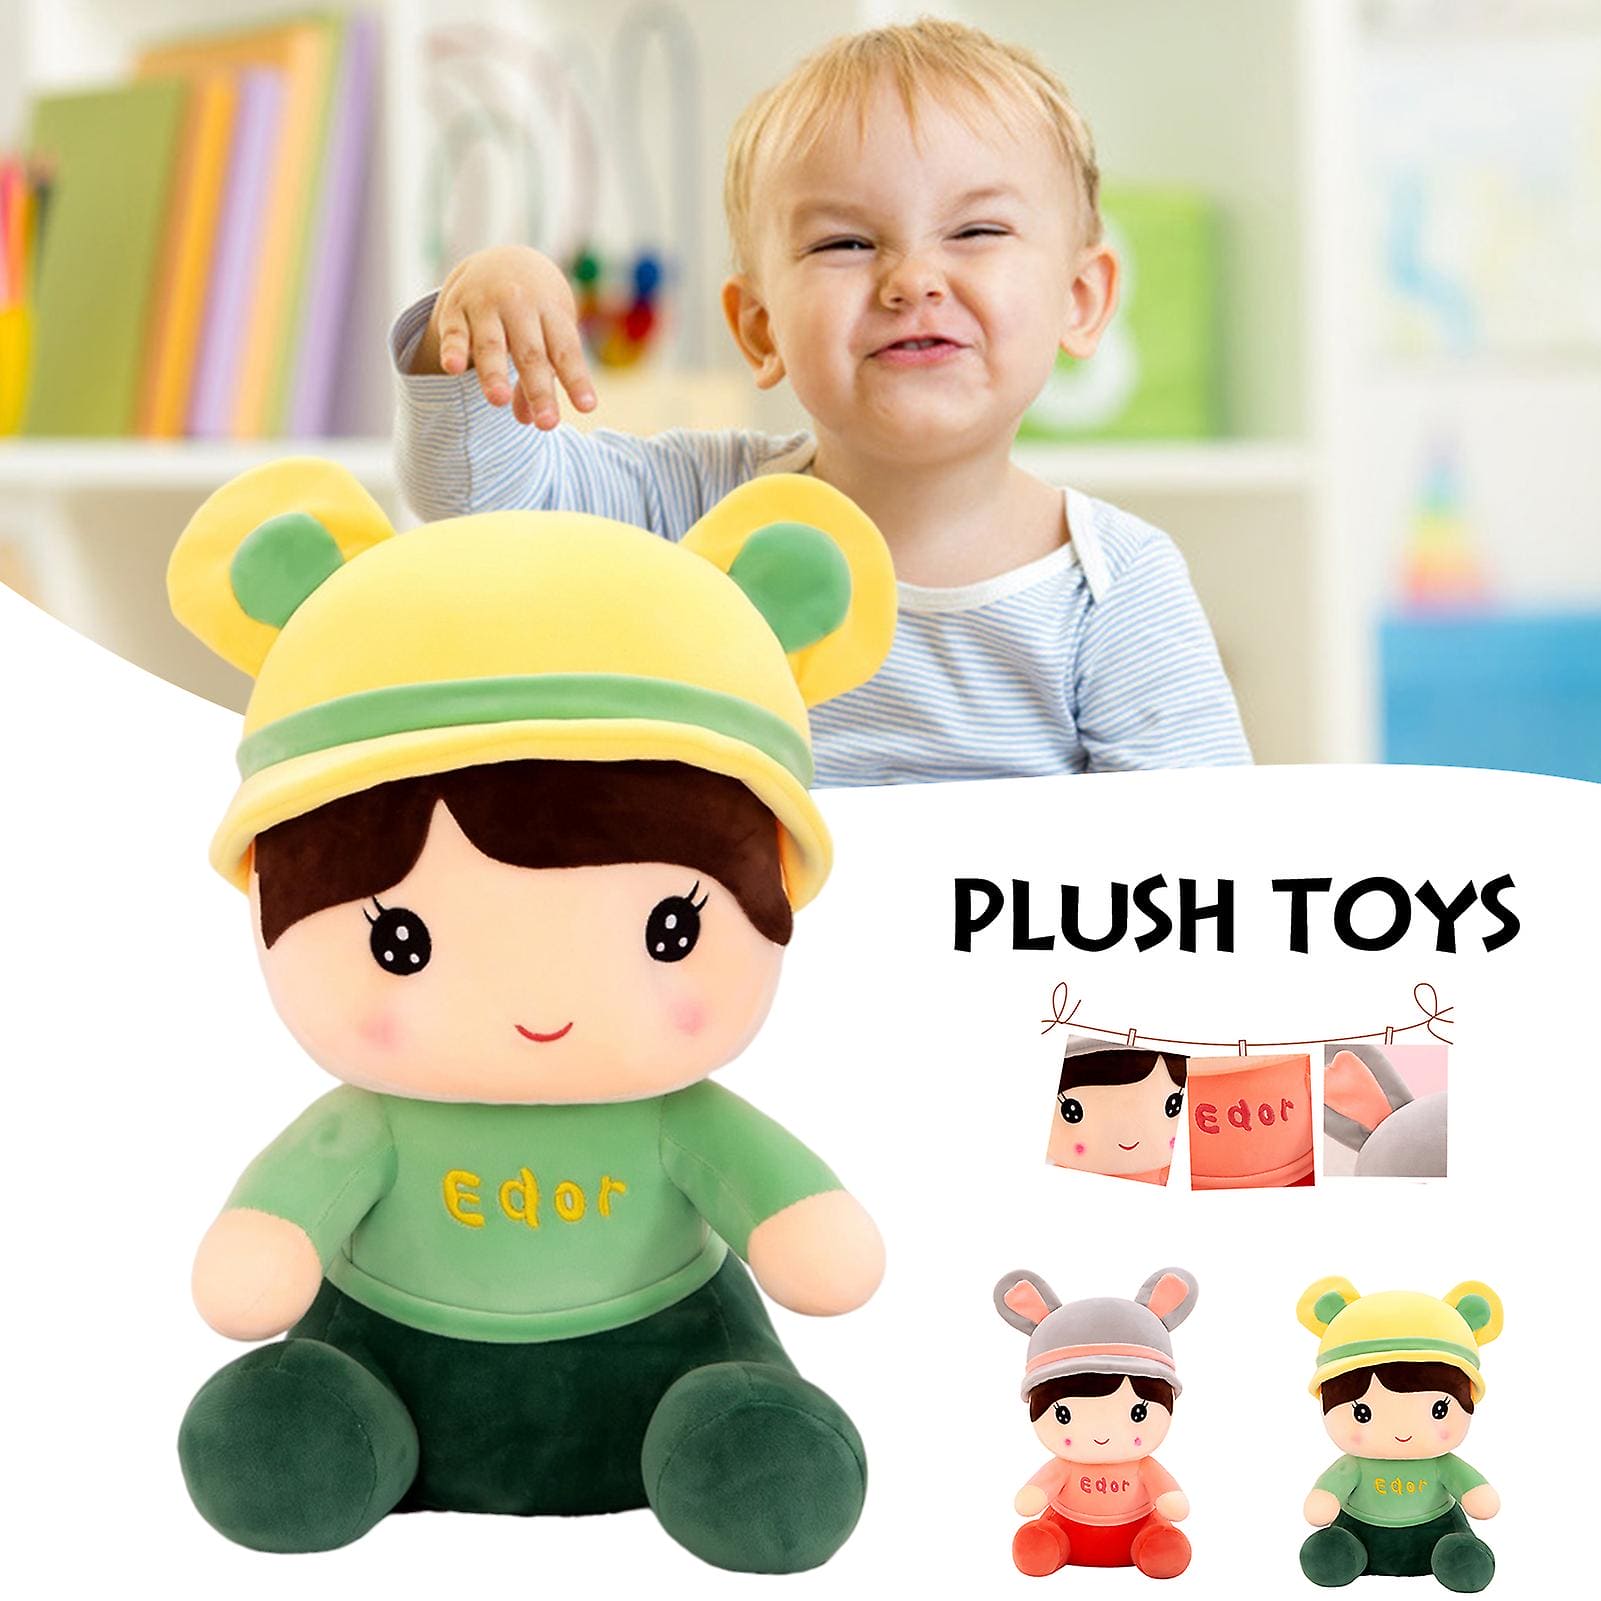 Banana Hat Baby Plush Toy, Soft Kids Plush Toy, Doll Stuffed Toy